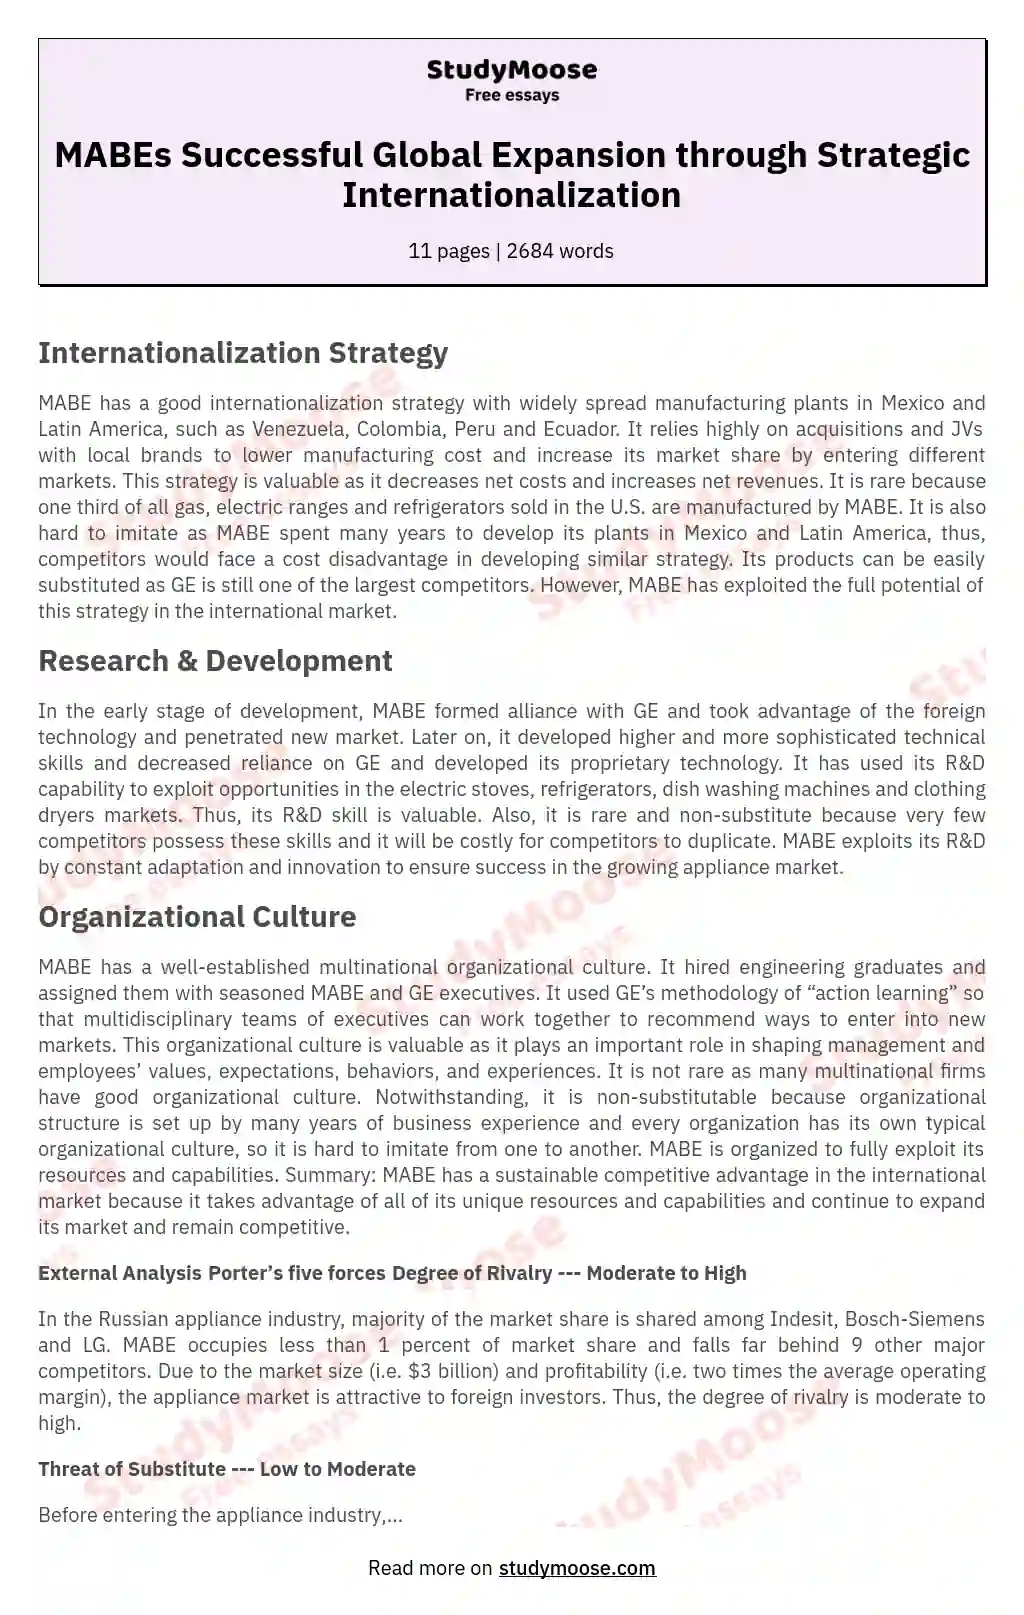 MABEs Successful Global Expansion through Strategic Internationalization essay